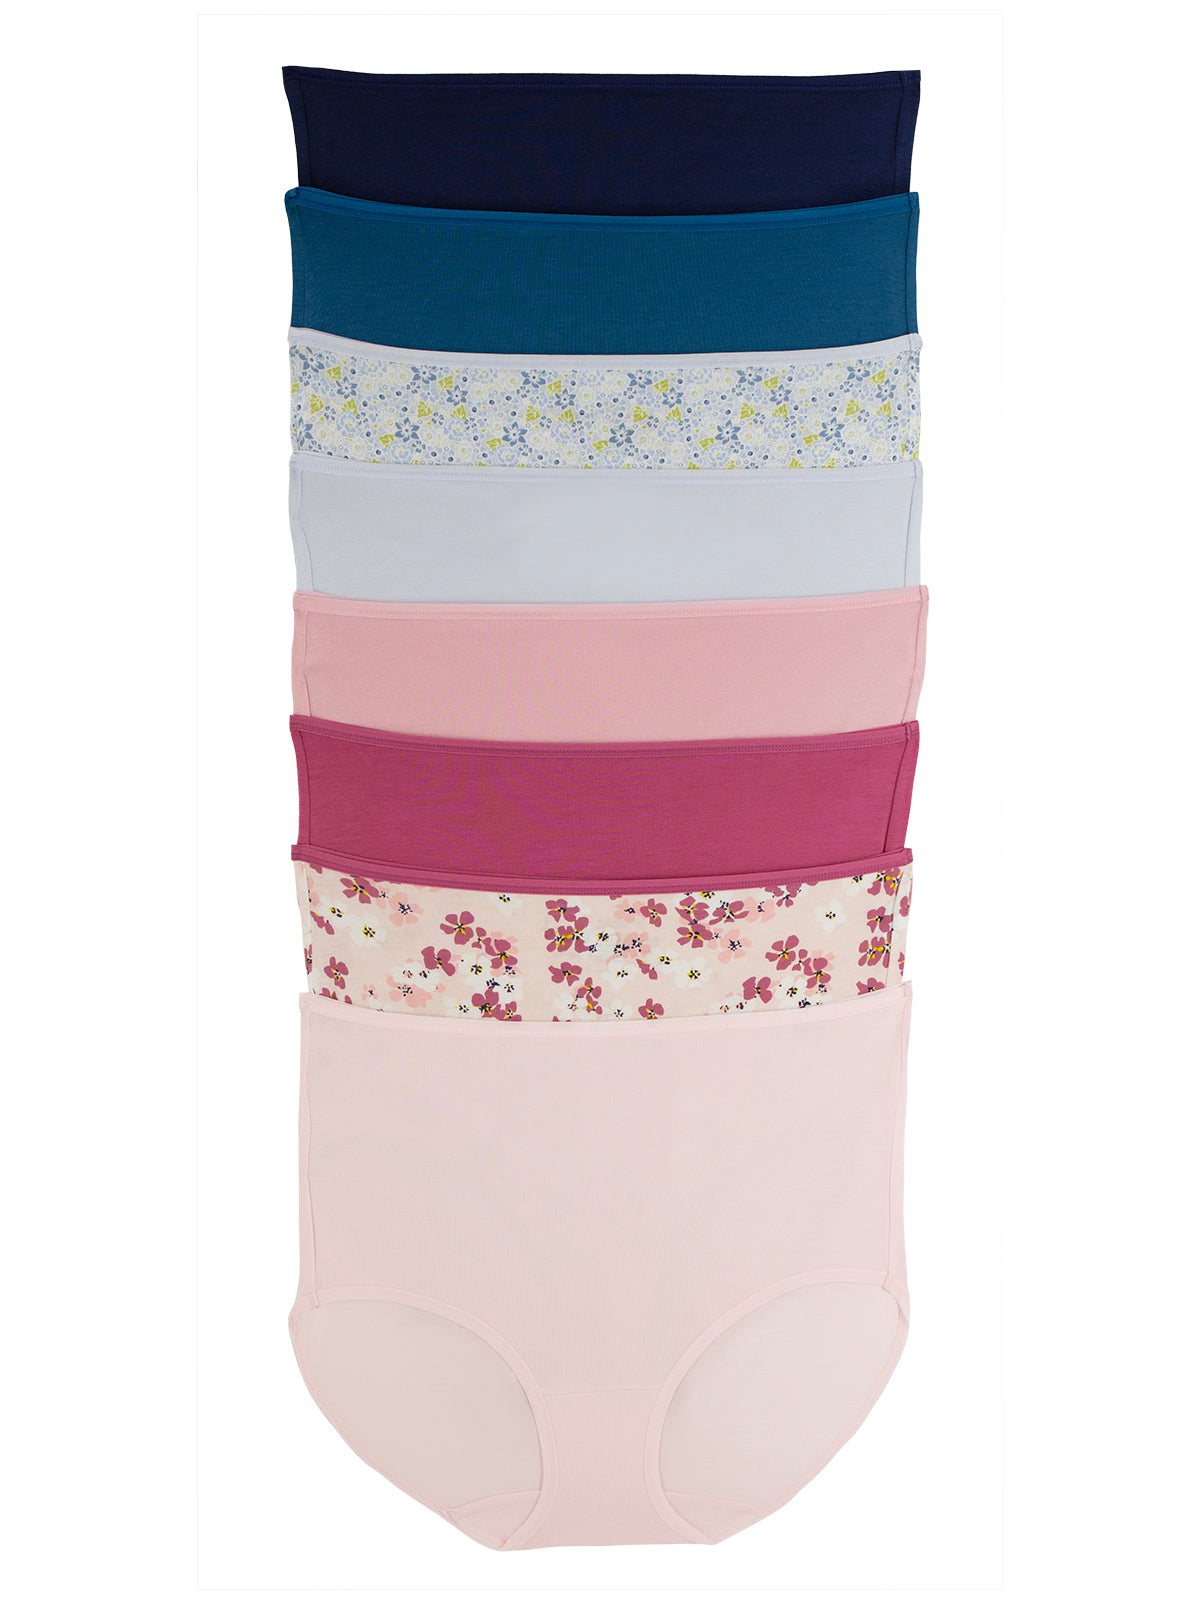 Felina Organic Cotton Bikini Underwear for Women - Bikini Panties for Women  (6-Pack) 